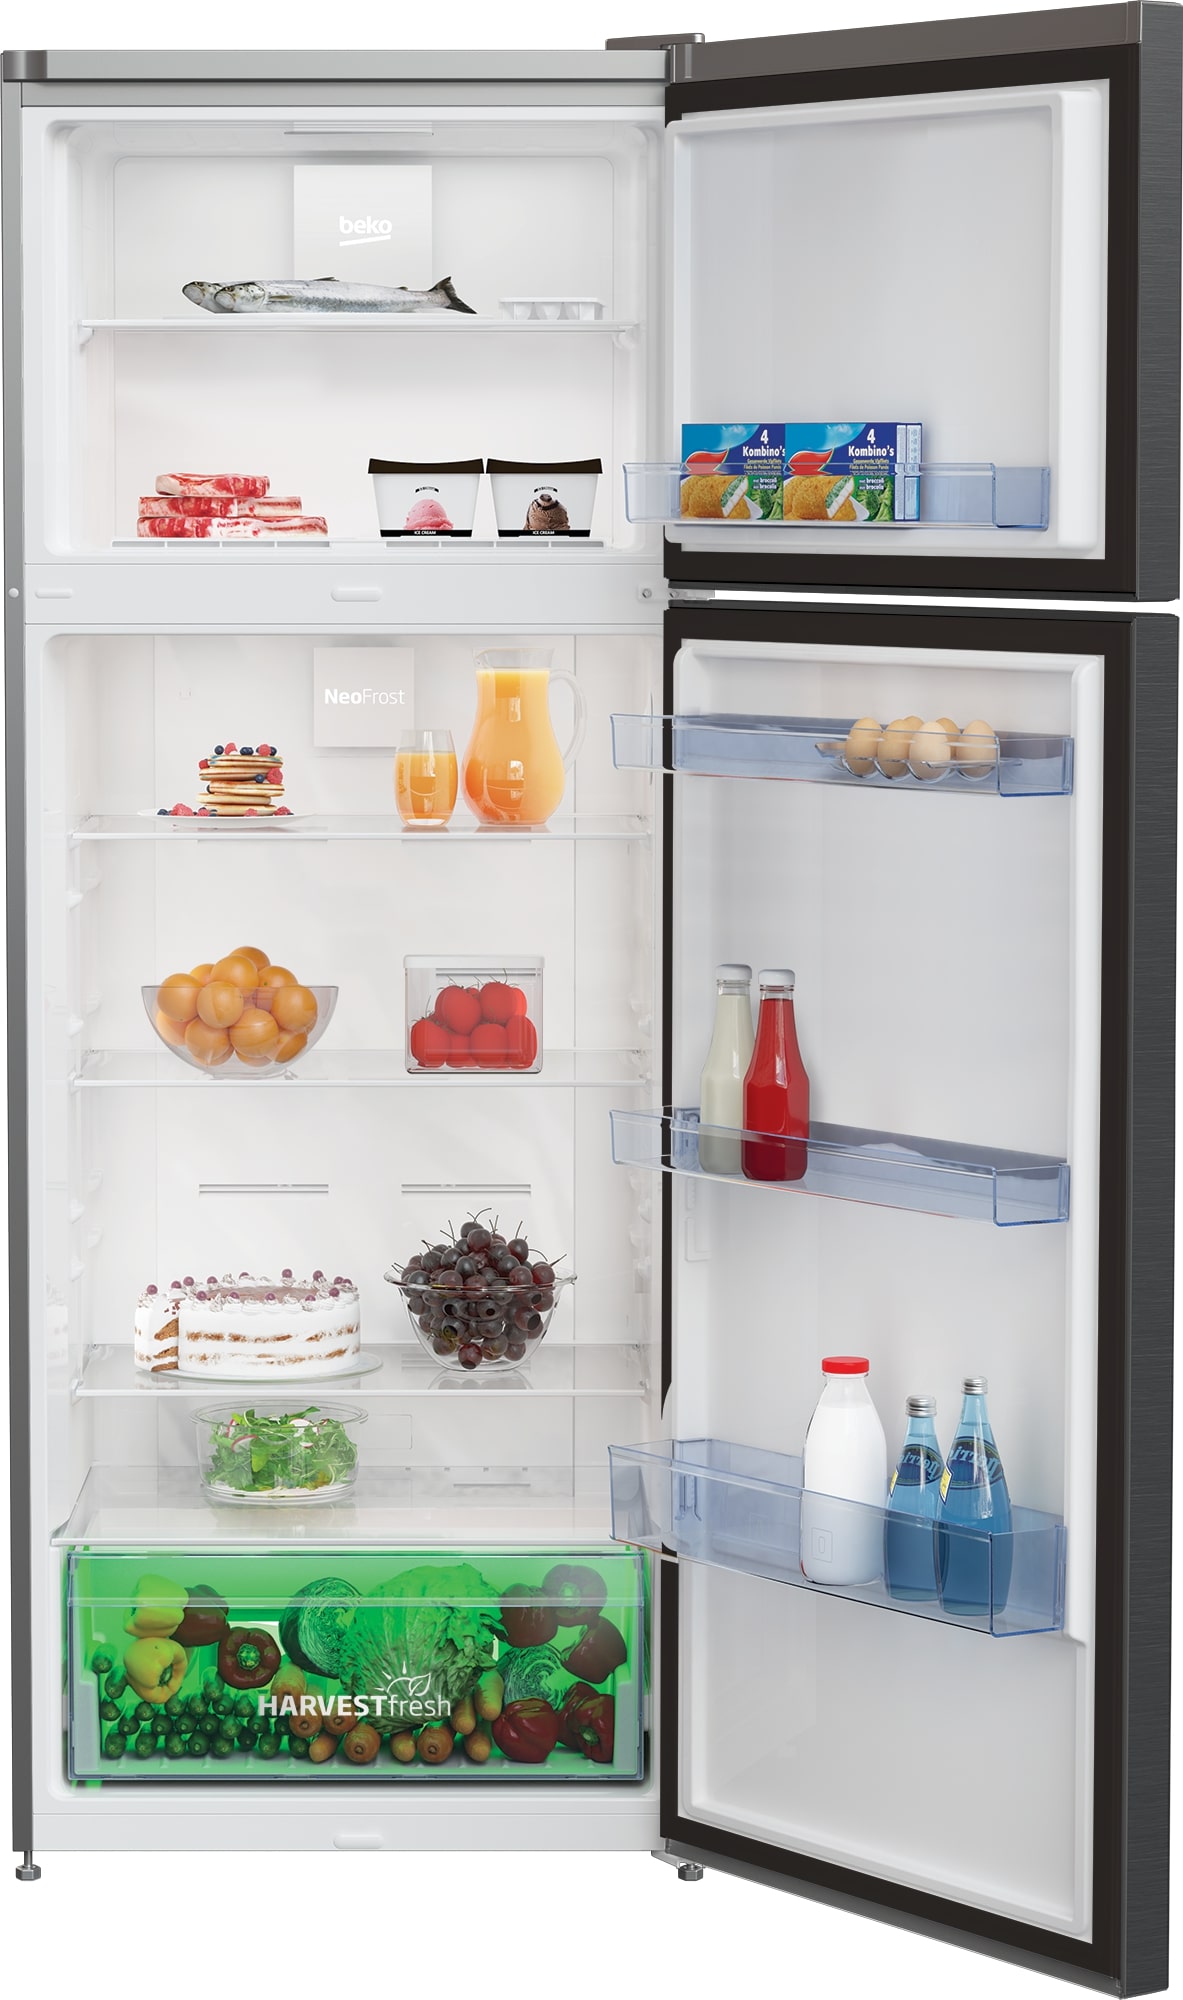 Beko Refrigerator with Top Freezer 455 litres- Black